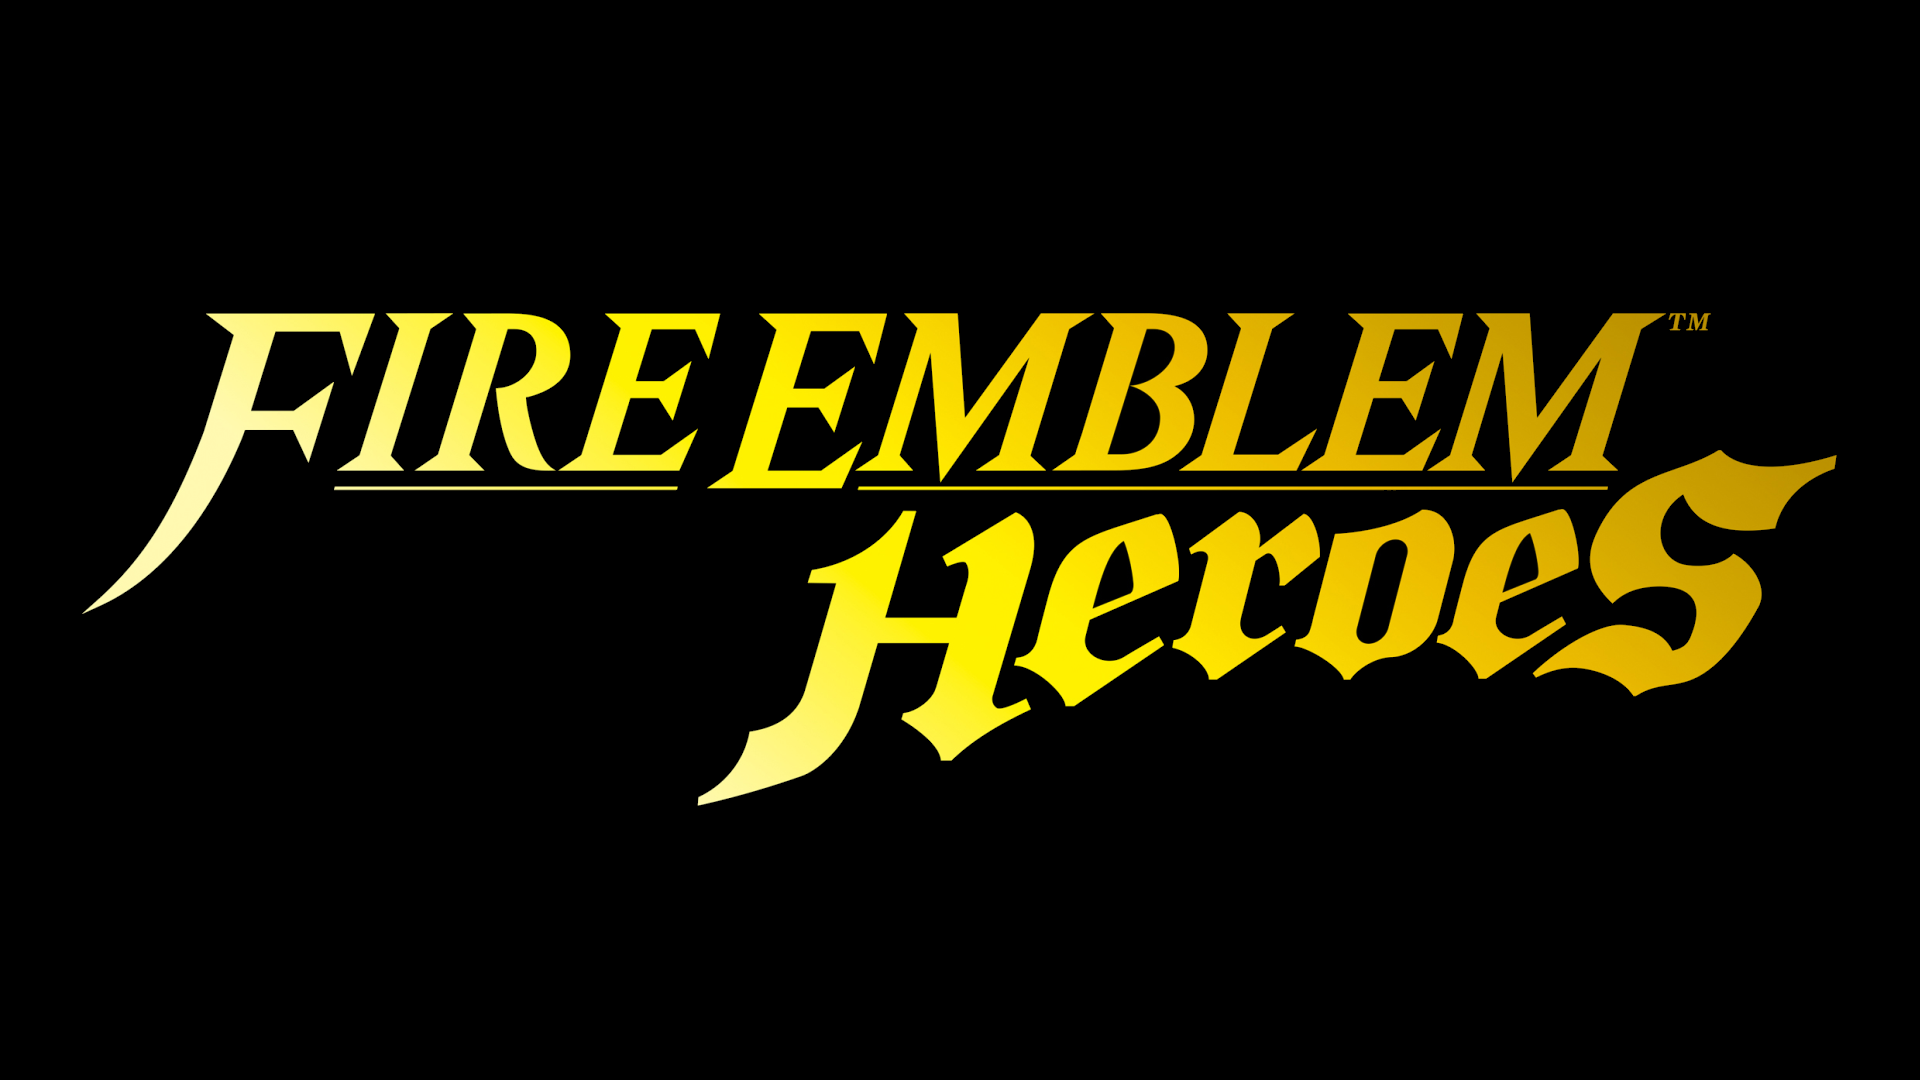 Fire Emblem Heroes Logo